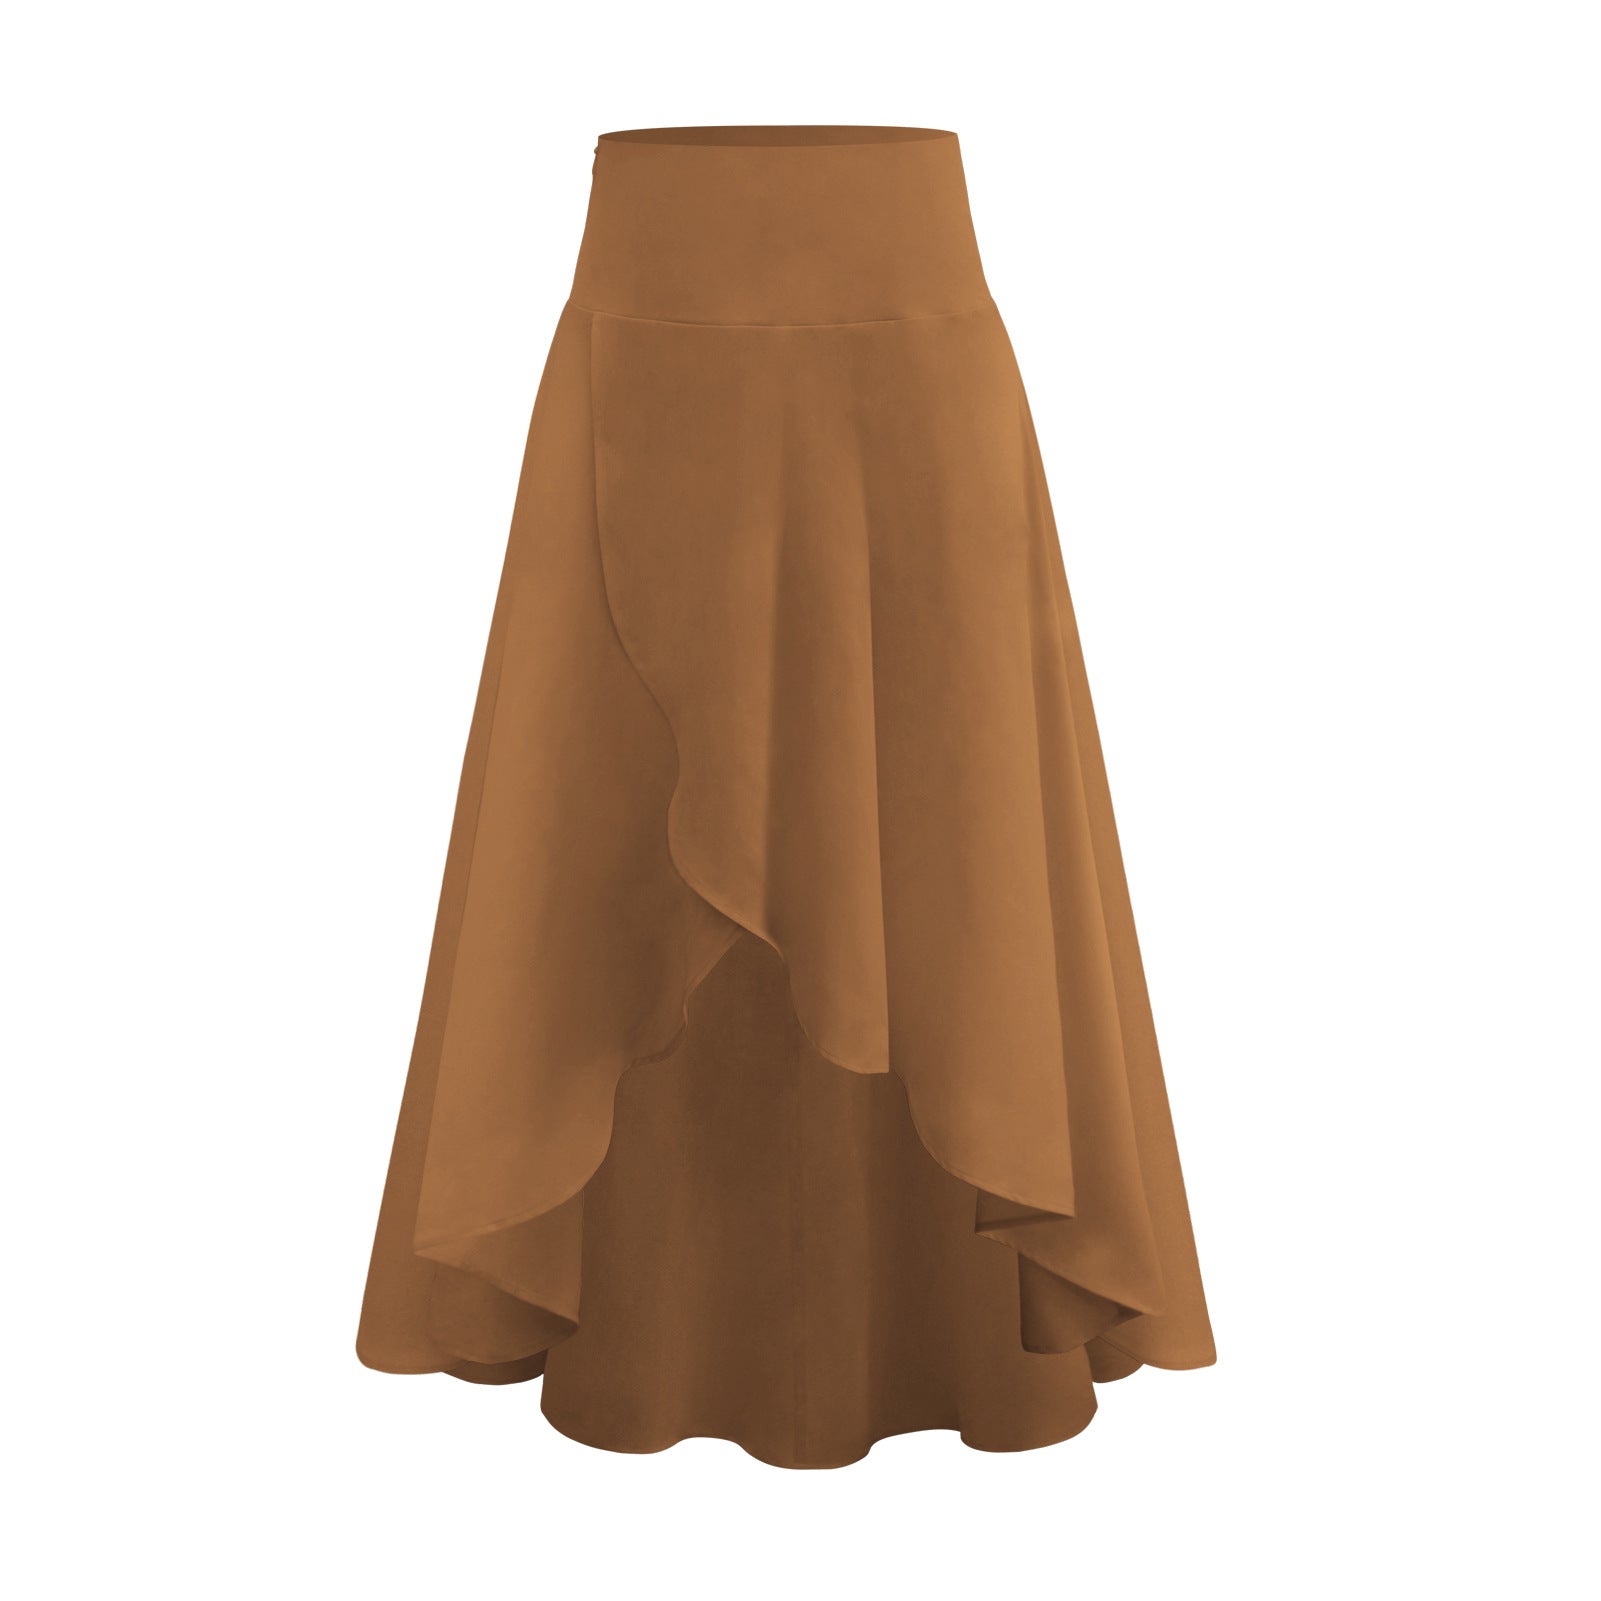 Solid Color Women's Ruffled Irregular Elegant Summer Wear Fashion Skirt